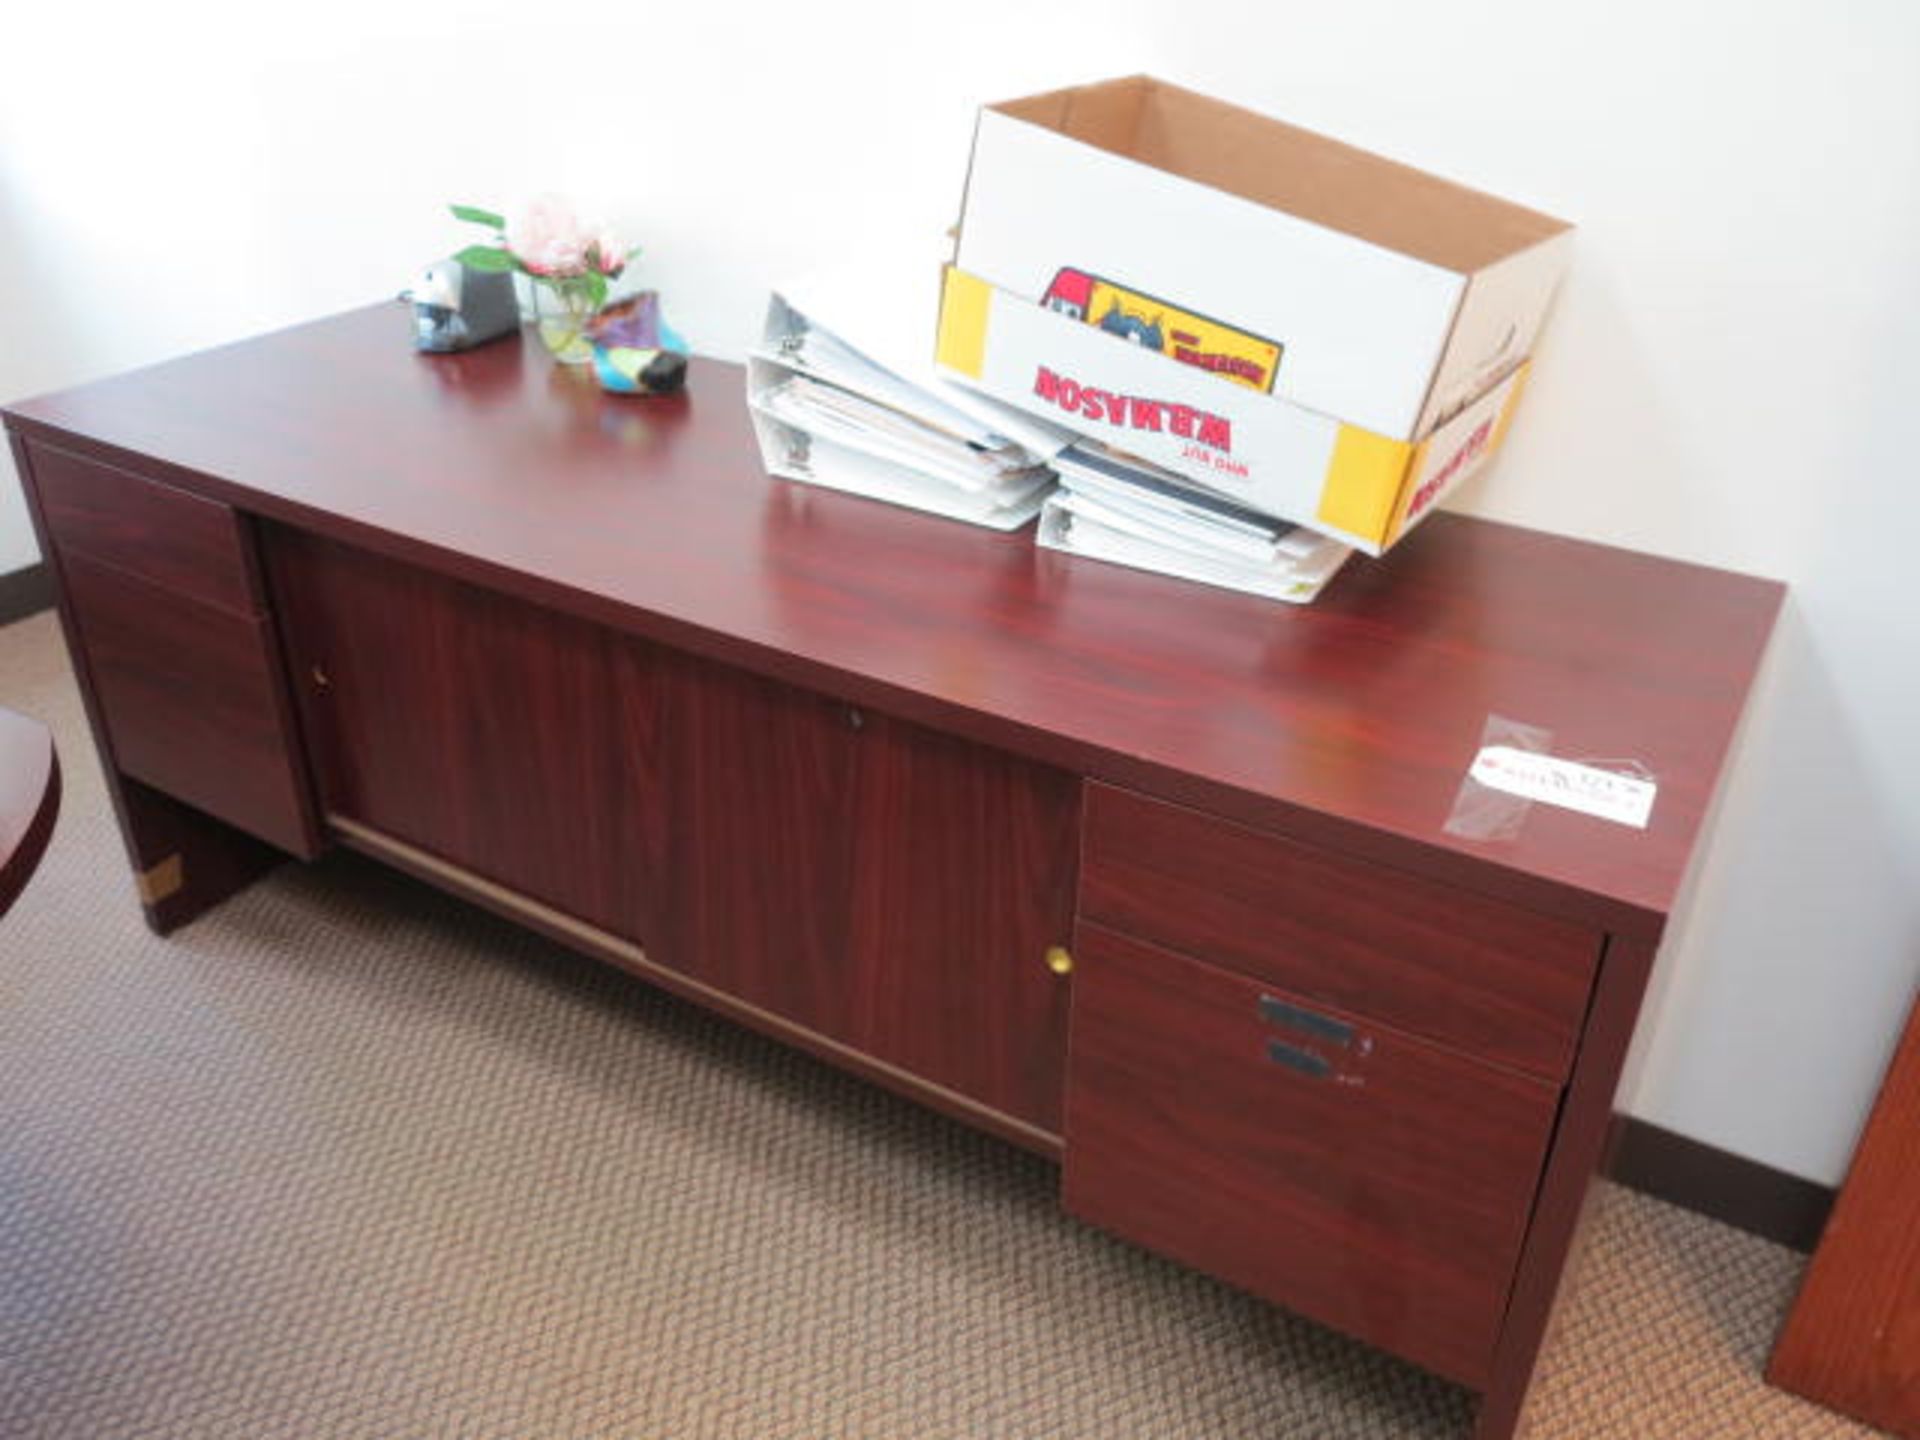 Lot 96'' x 42'' x 72'' U Shaped Executive Desk, Credenza and Bookshelf - Image 2 of 3